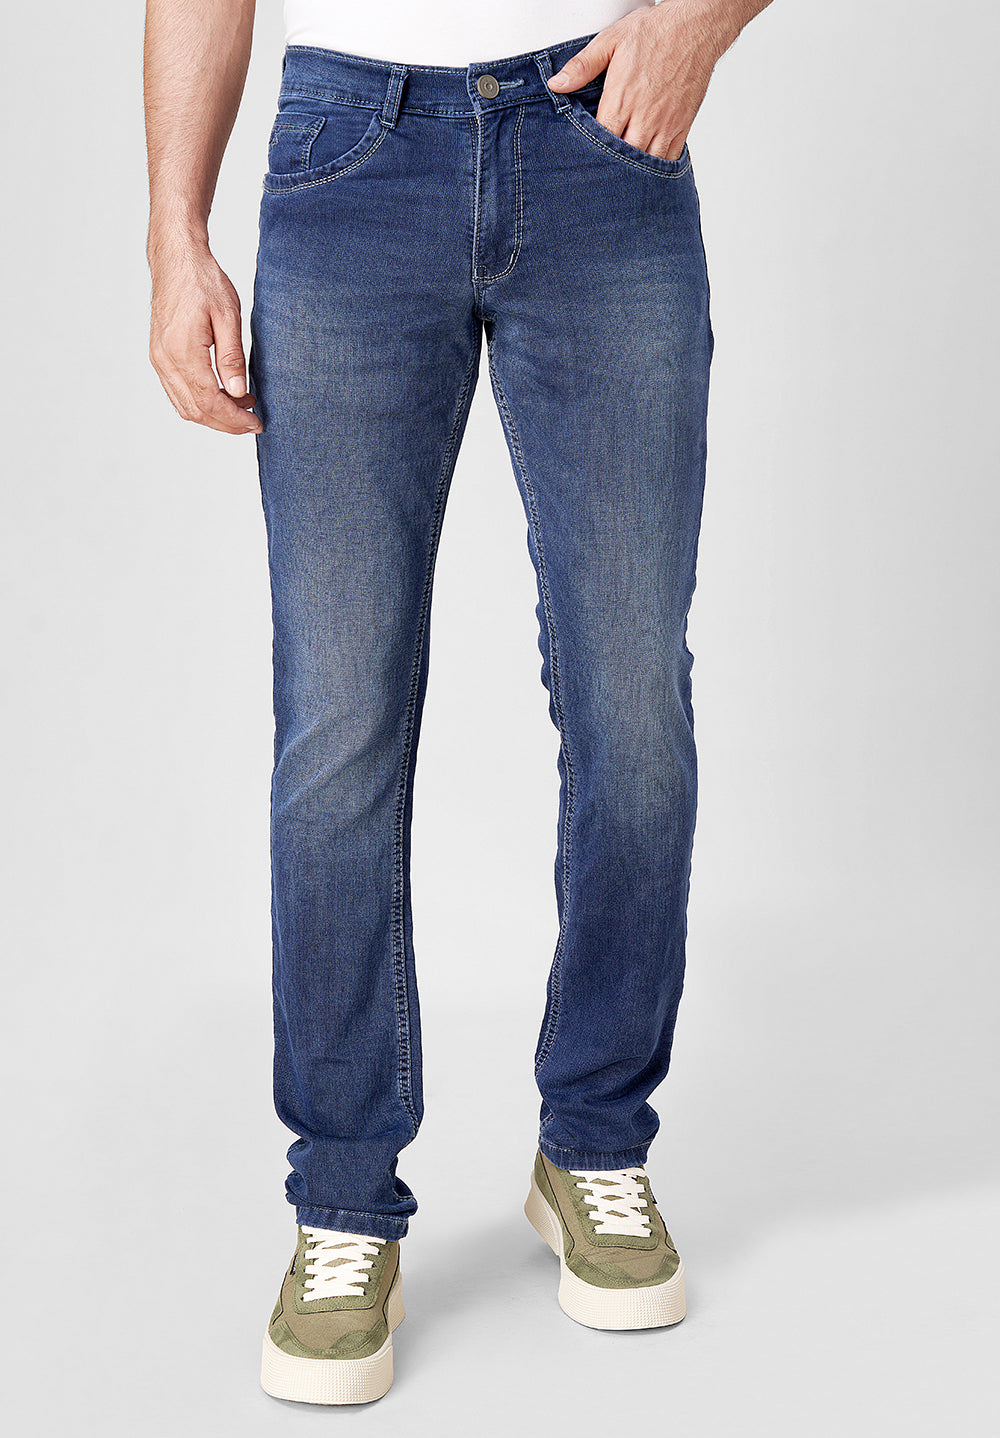 Blue Slim Fit Jeans - S41823